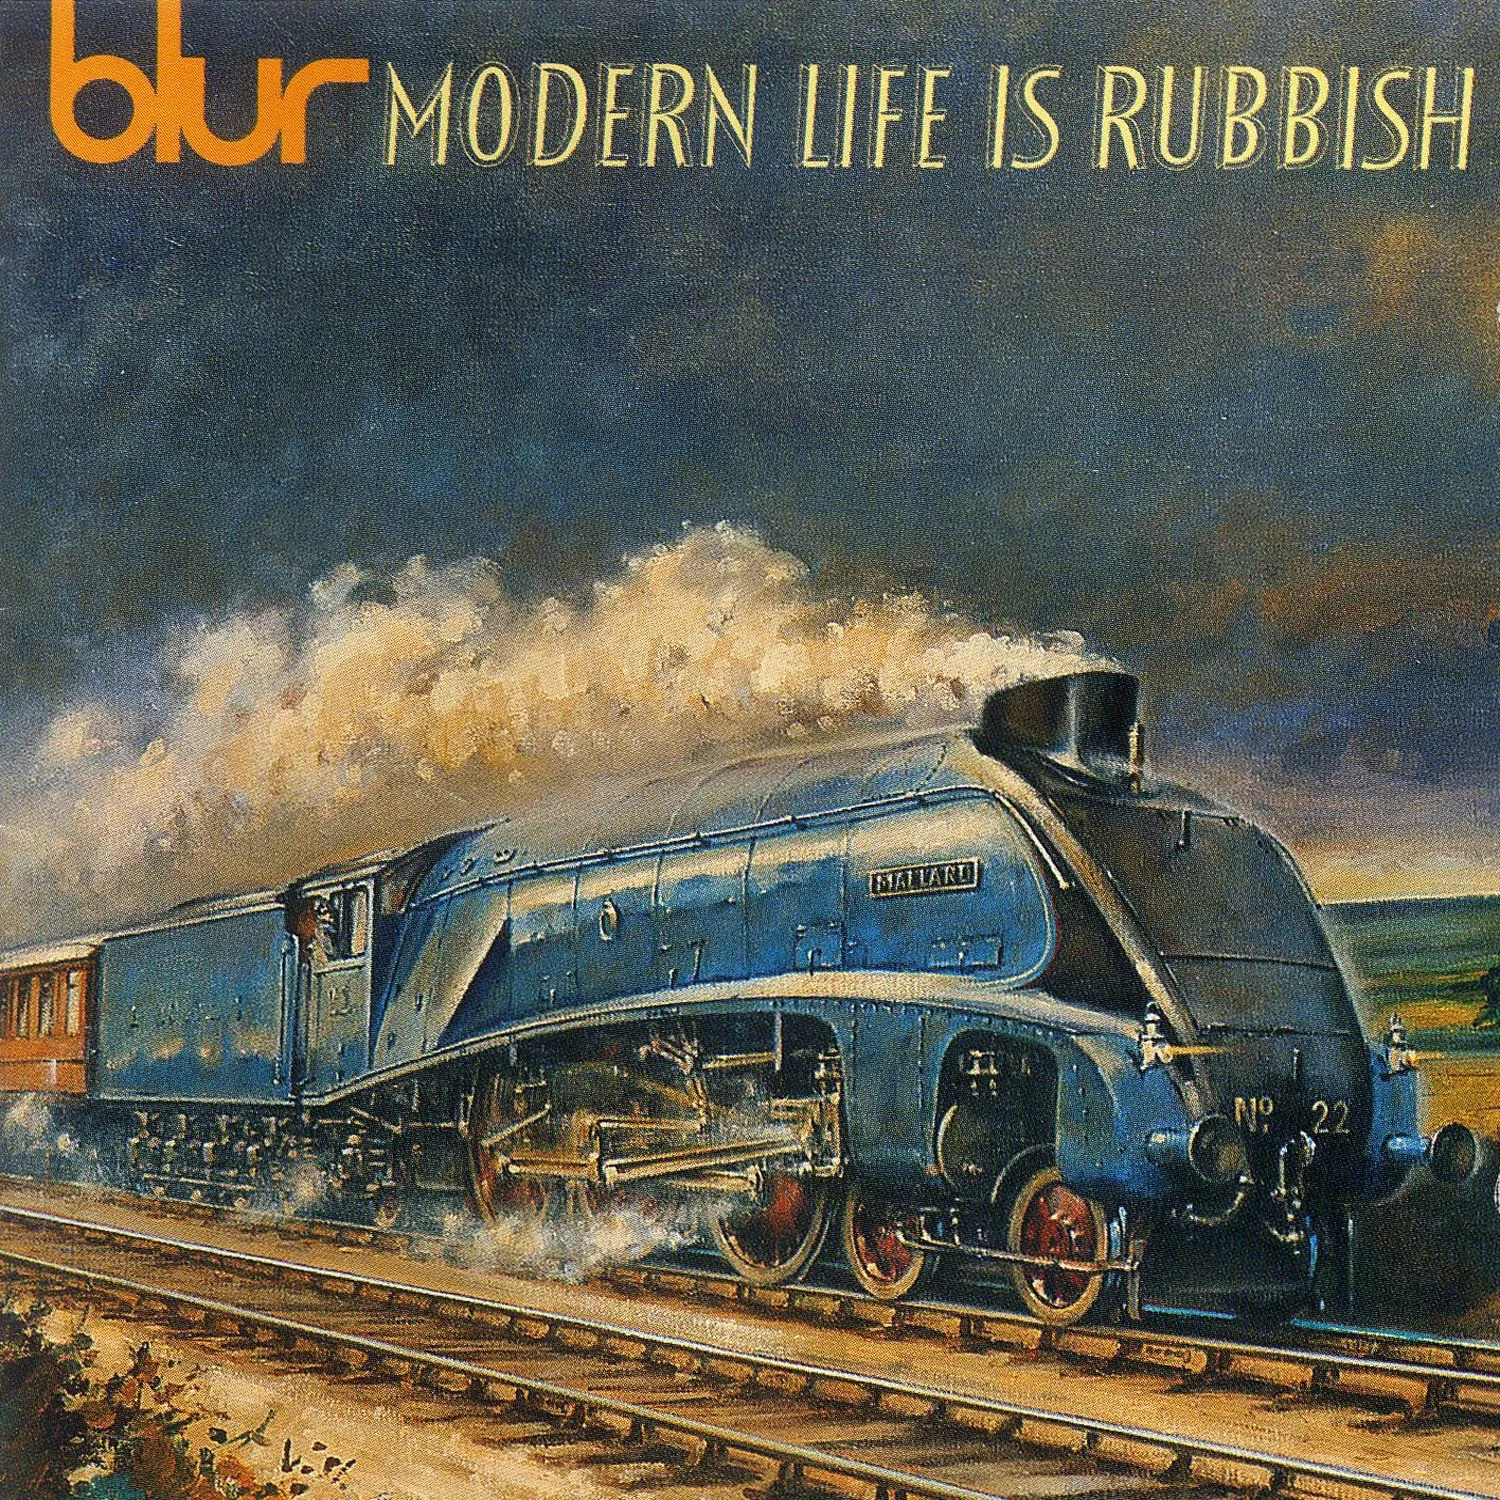 Blur - Modern Life Is Rubbish artwork